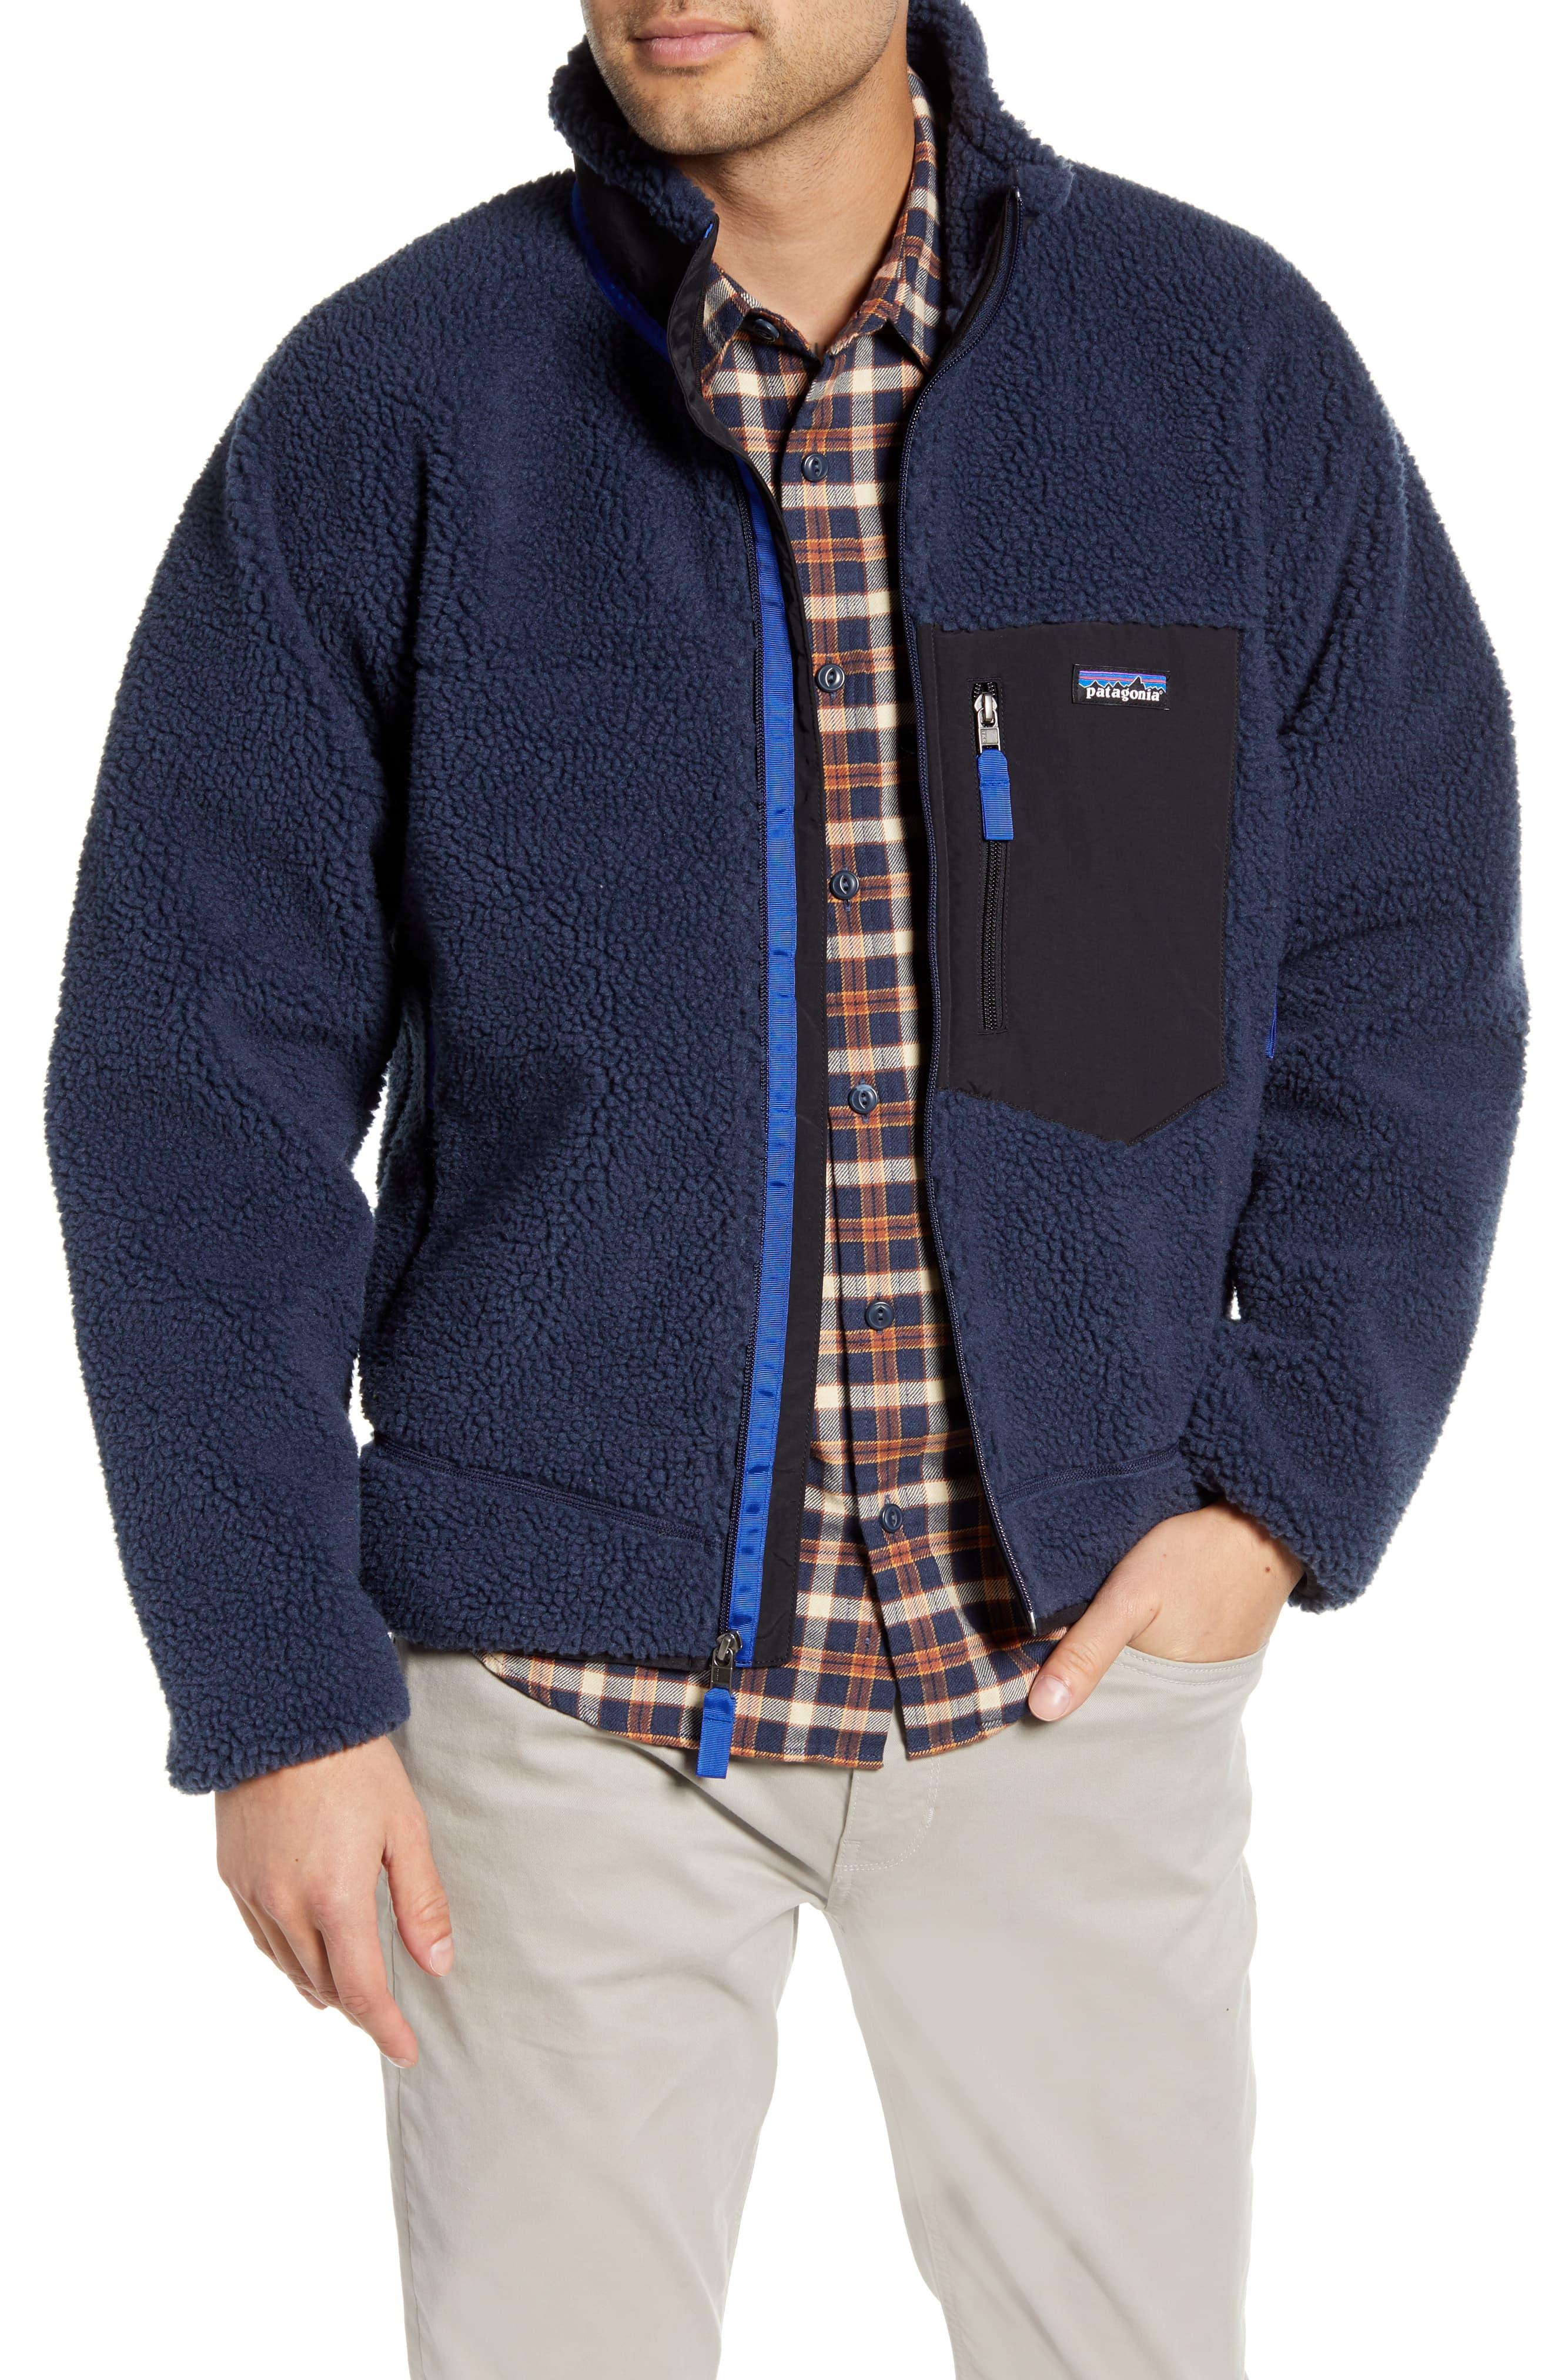 Patagonia Retro-x Fleece Jacket in Blue for Men - Lyst